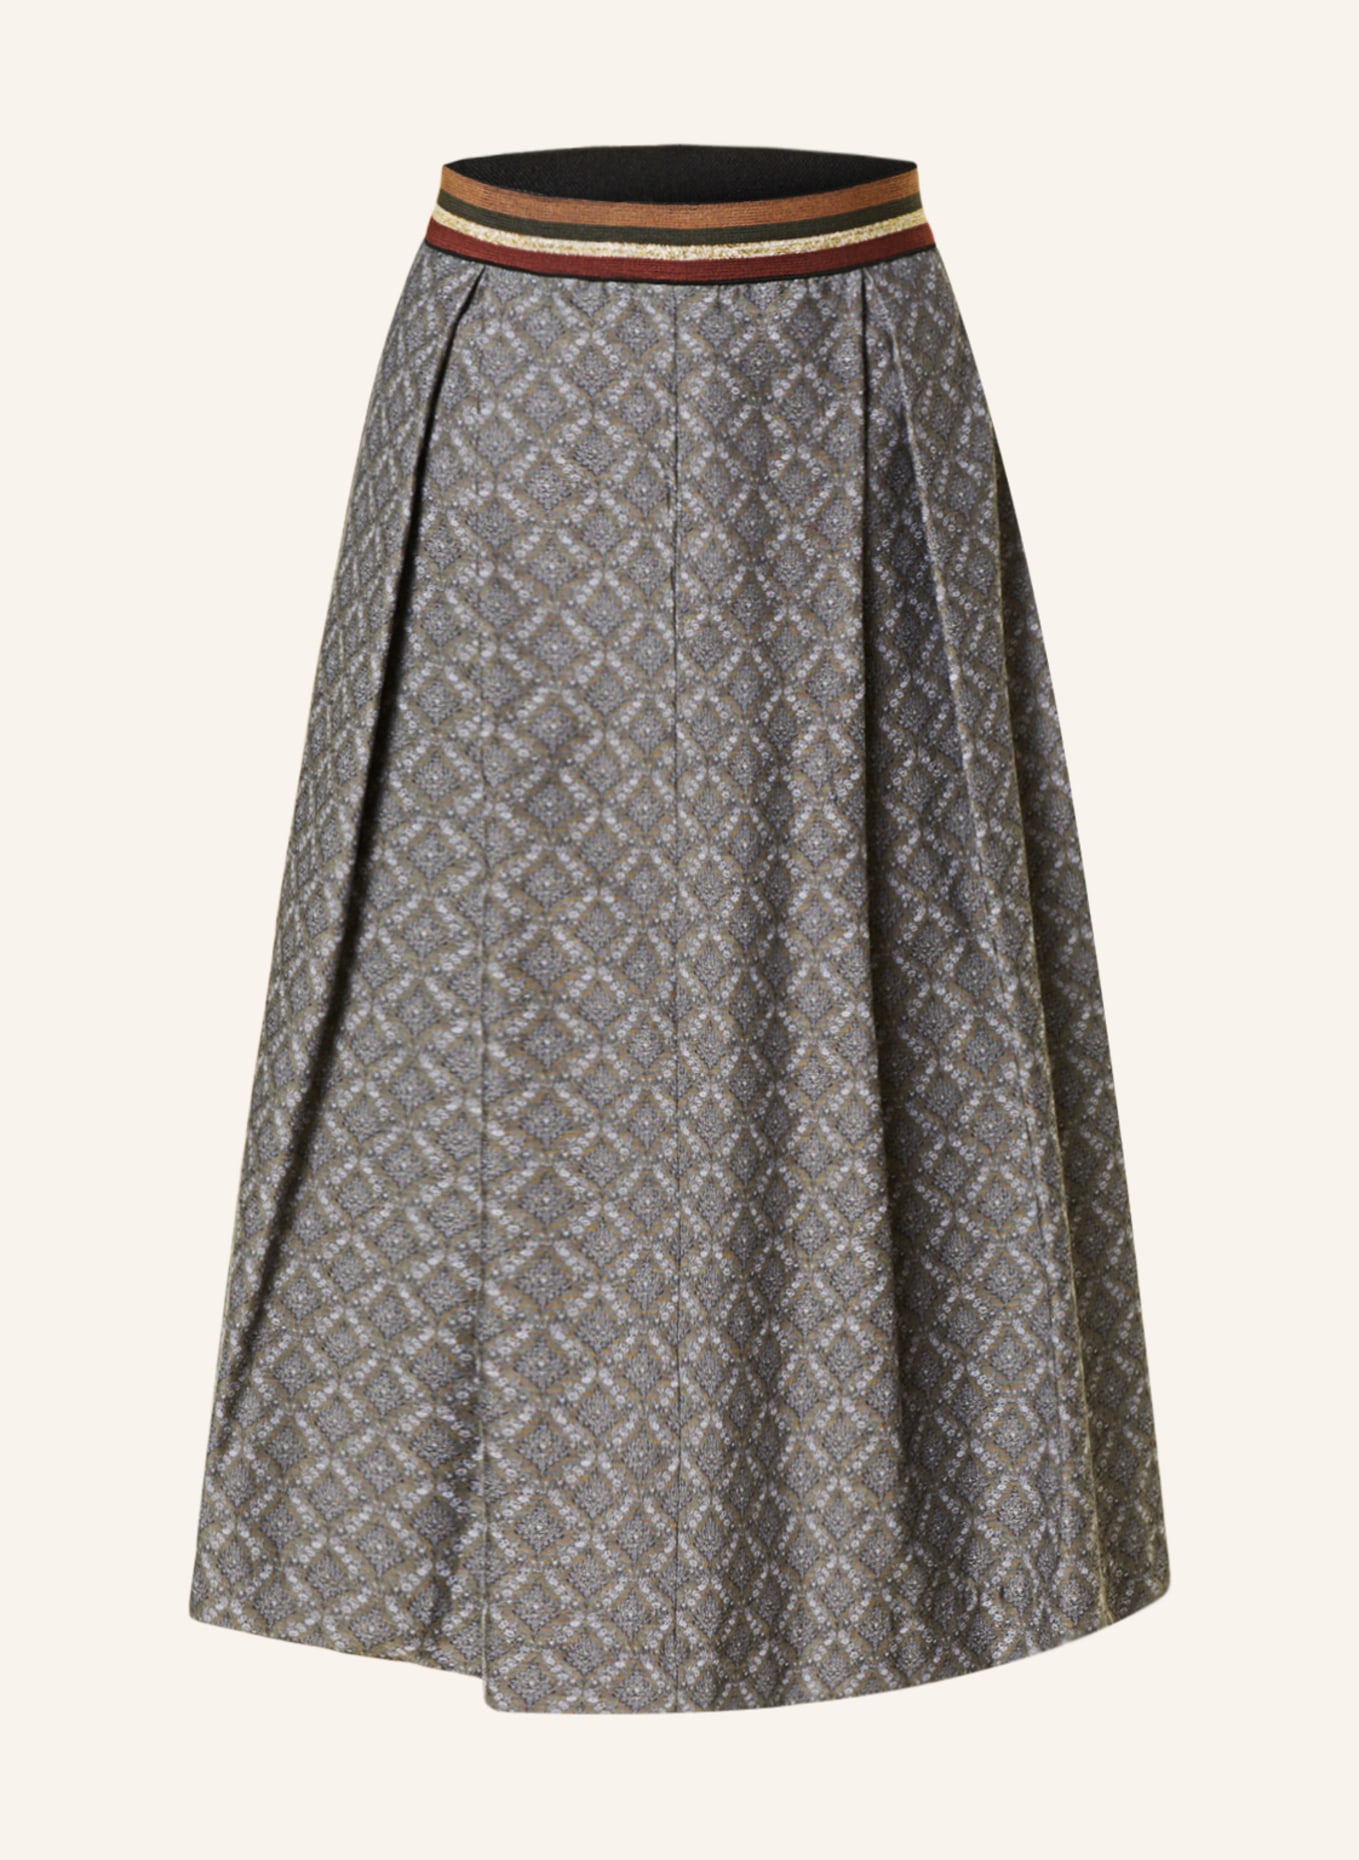 KINGA MATHE Skirt LARA with glitter thread, Color: GRAY/ LIGHT GRAY/ DARK GRAY (Image 1)